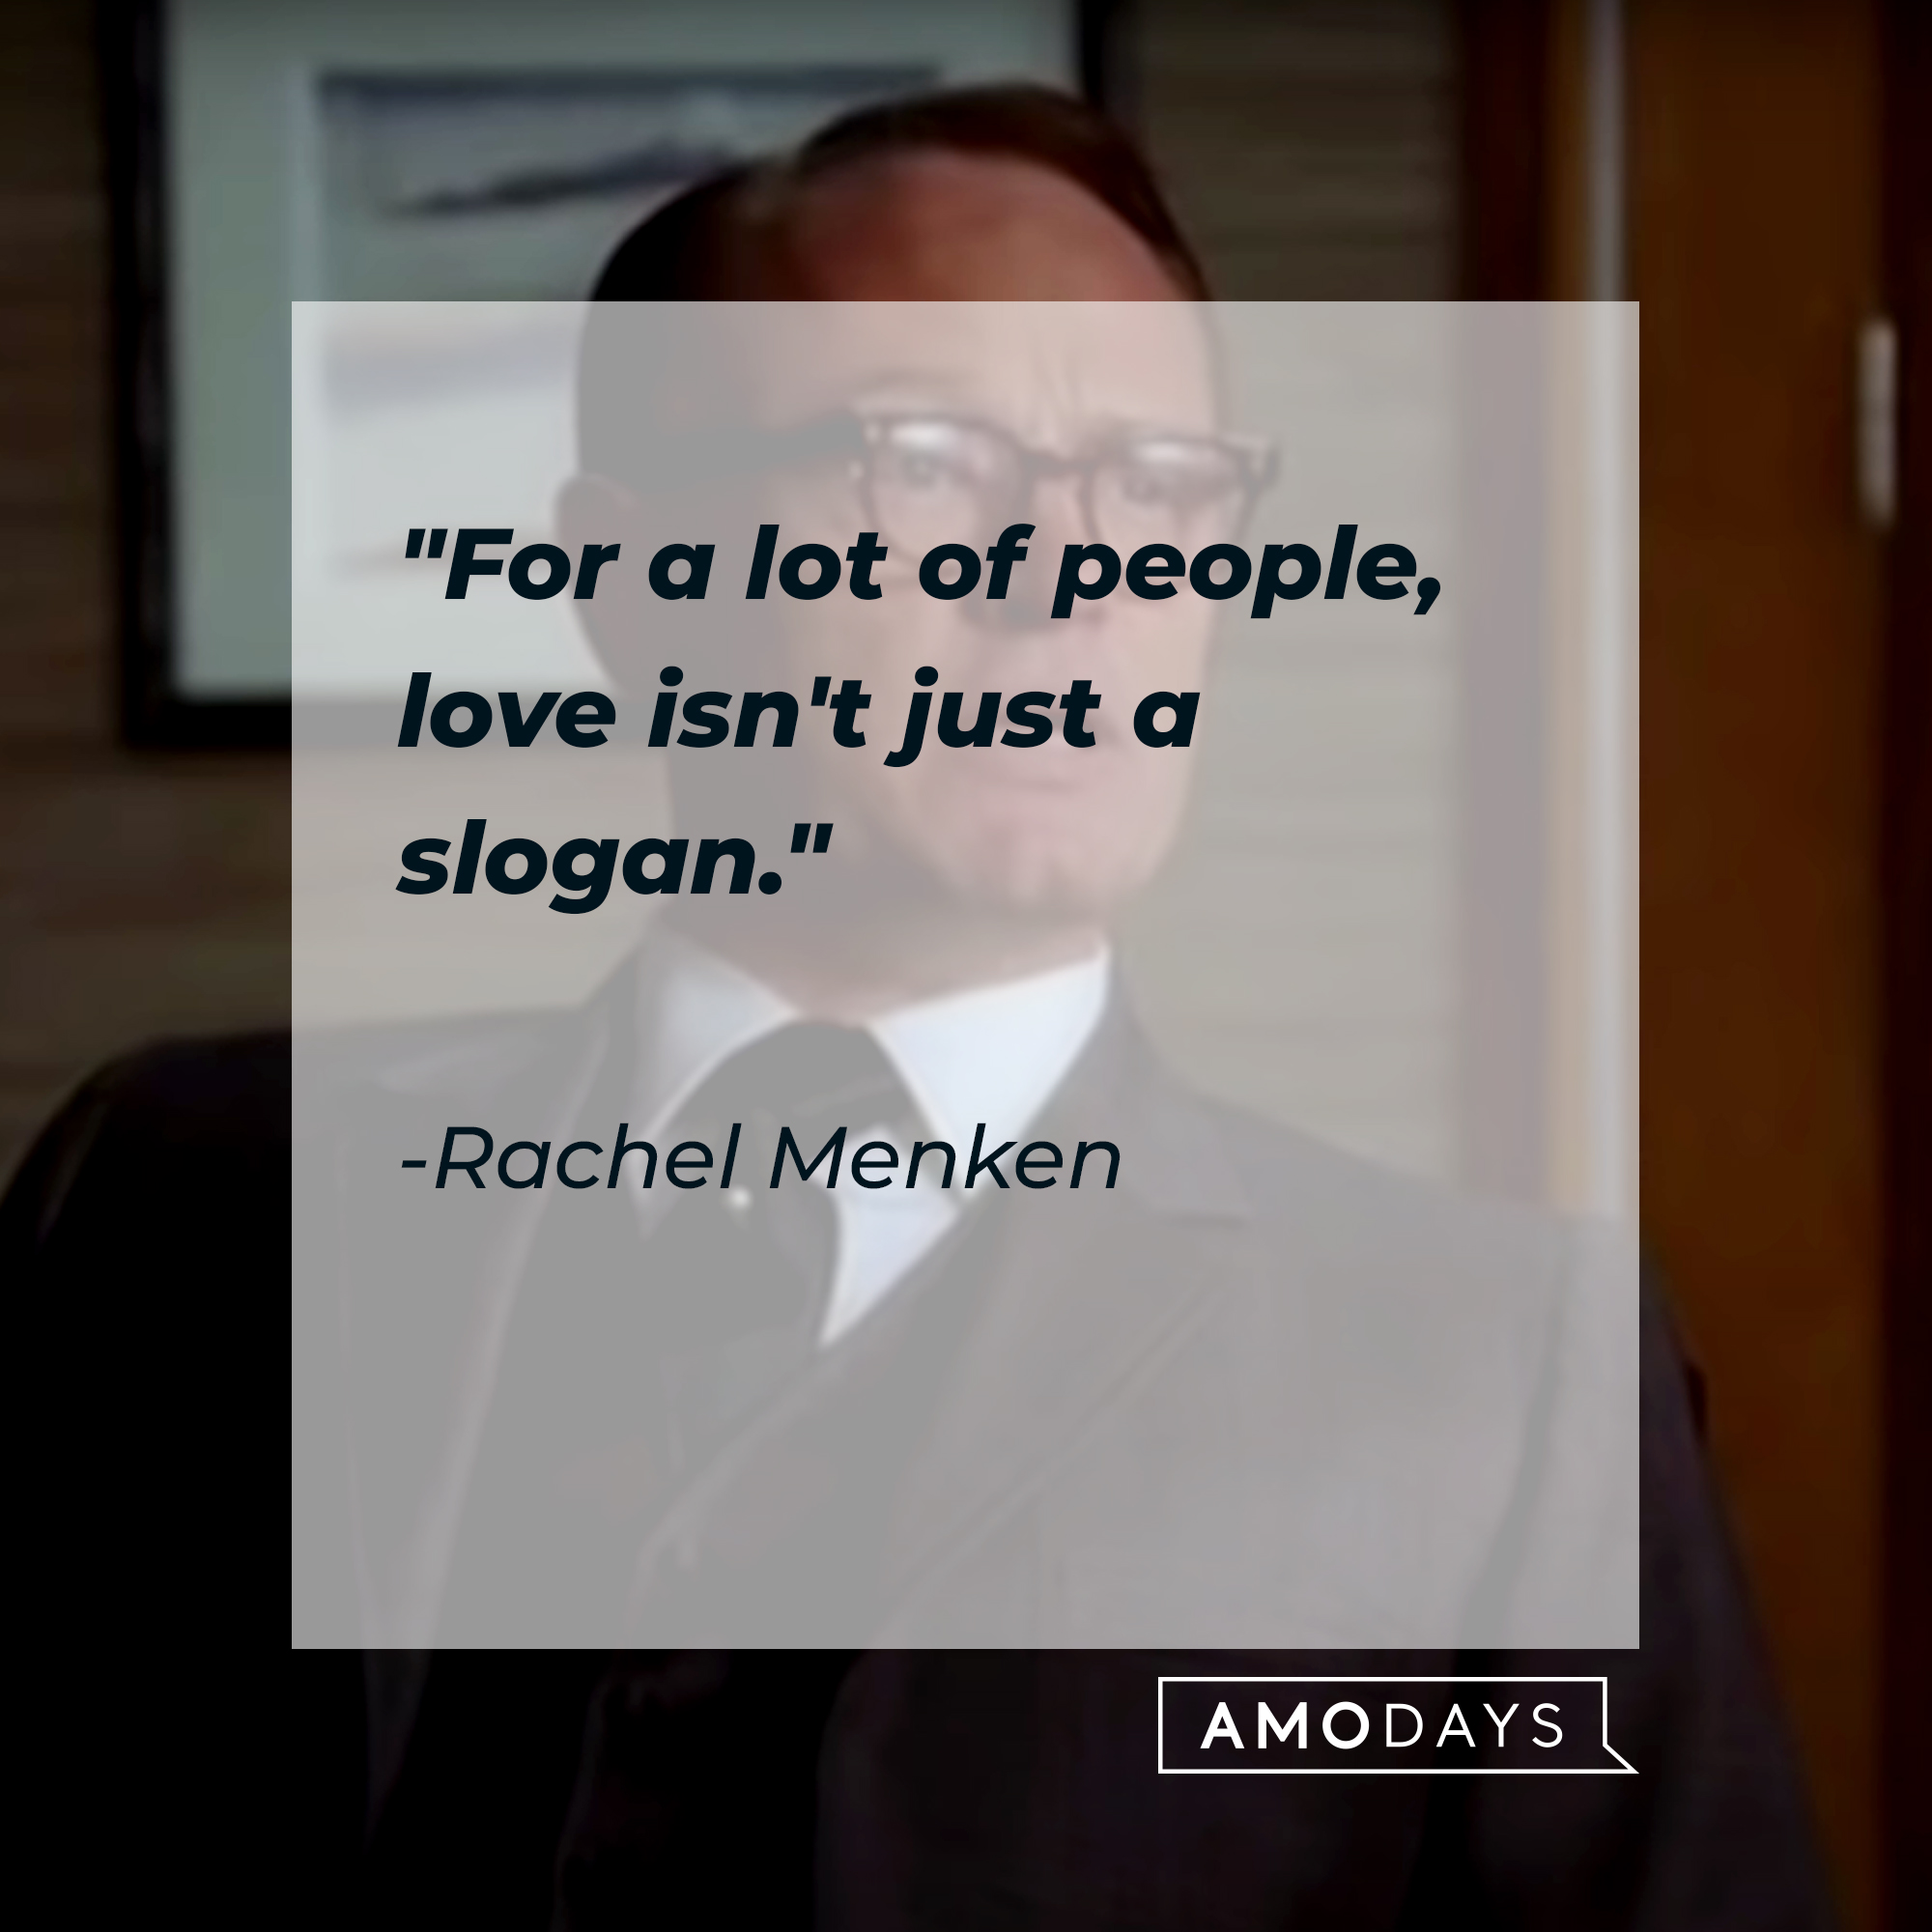 Rachel Menken's quote: "For a lot of people, love isn't just a slogan." | Source: Facebook.com/MadMen